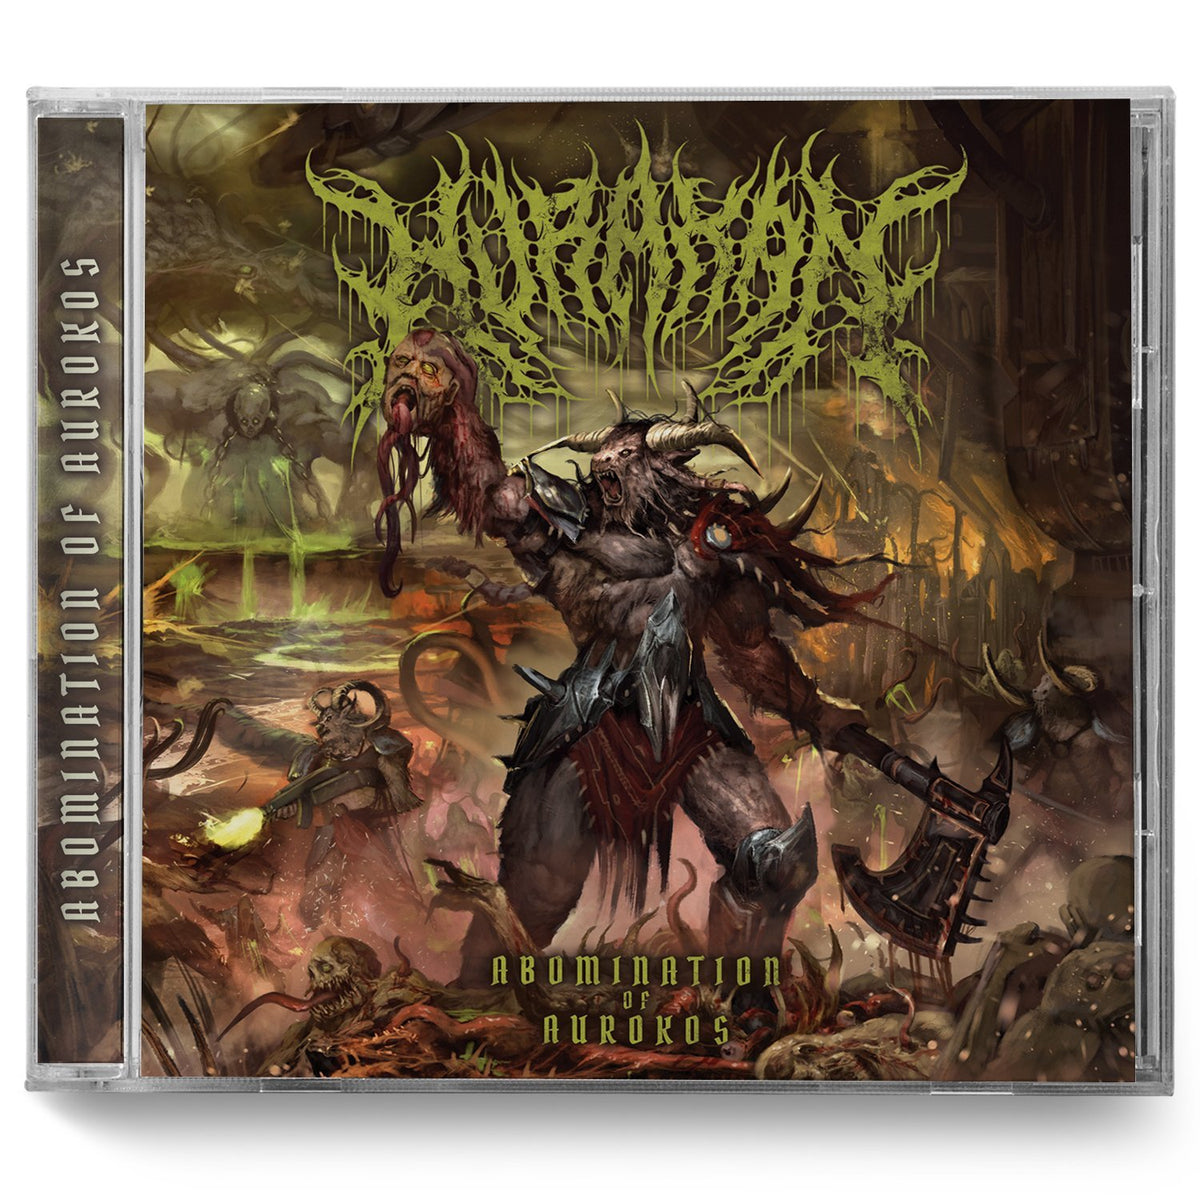 Hurakan 'Abomination of Aurokos' CD - Miasma Records